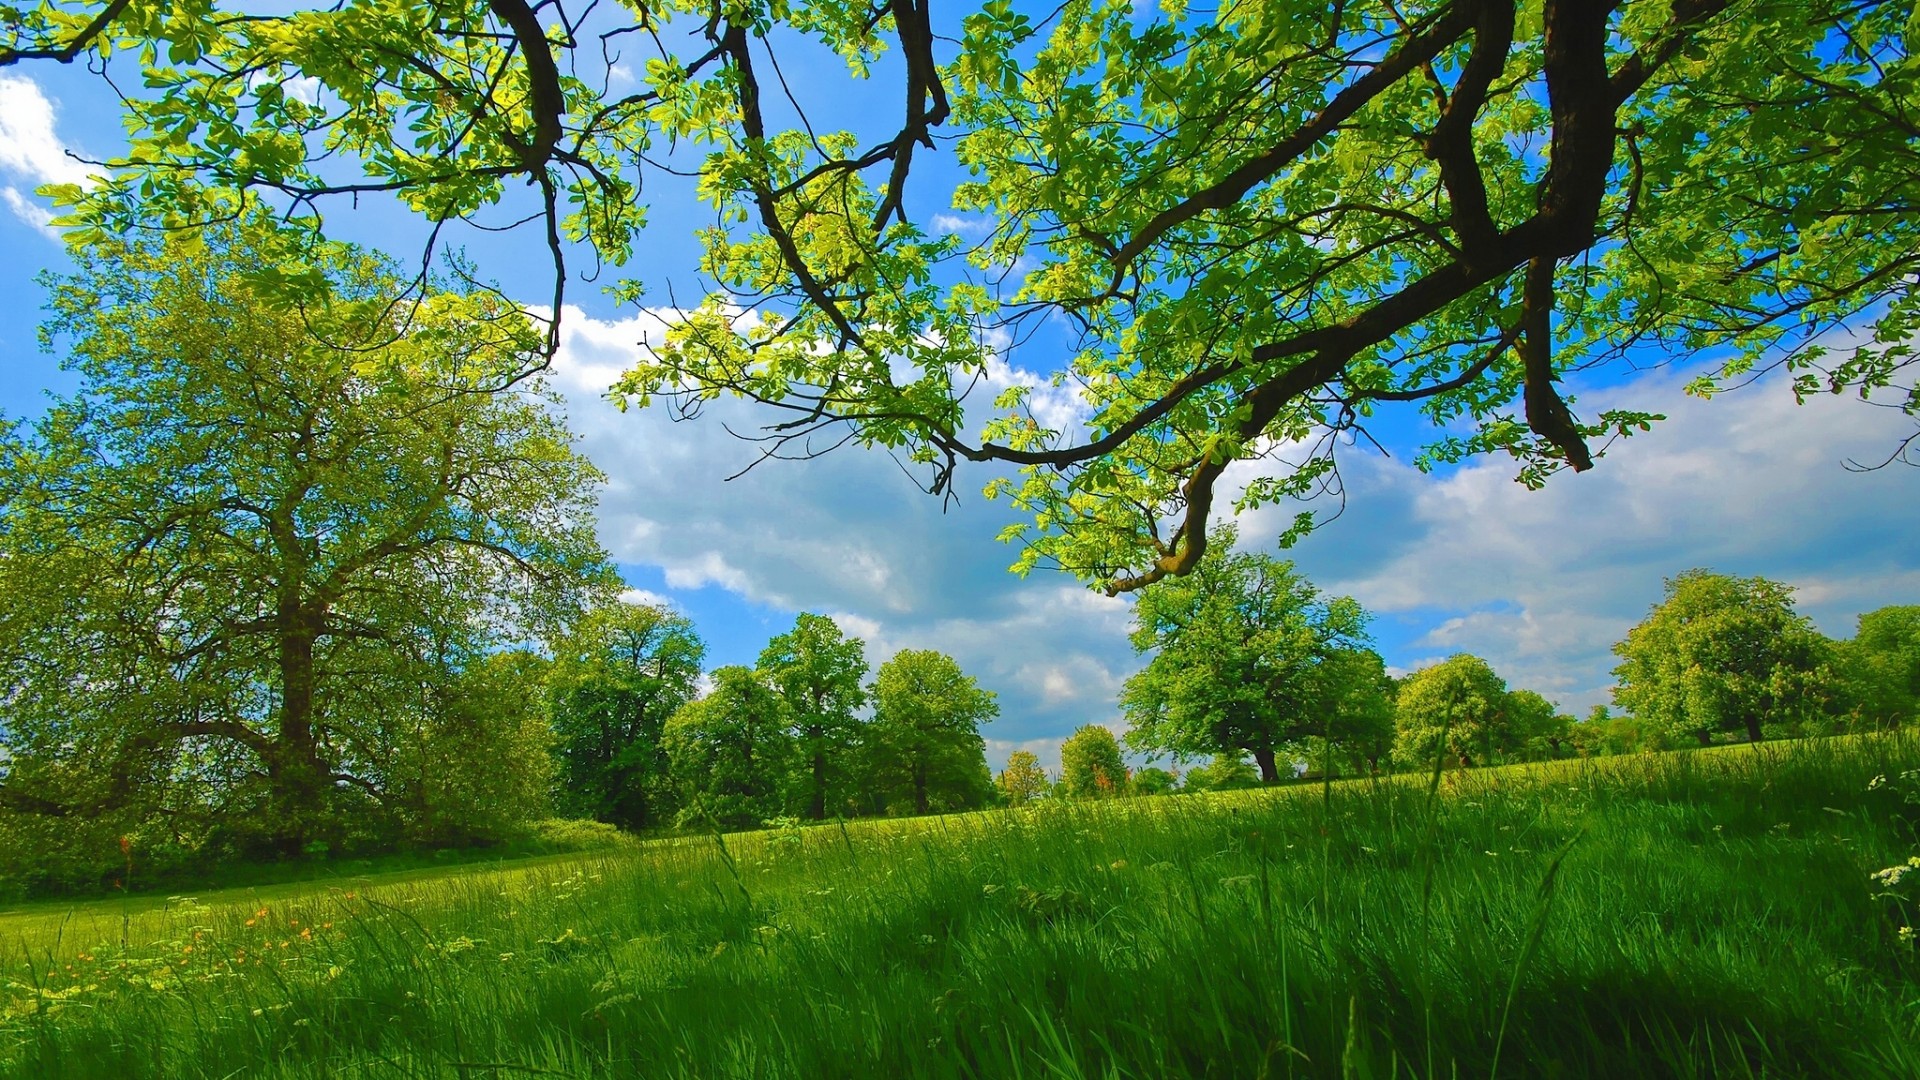 Summer, grass, trees, green, branches, sky, natural beauty wallpaper